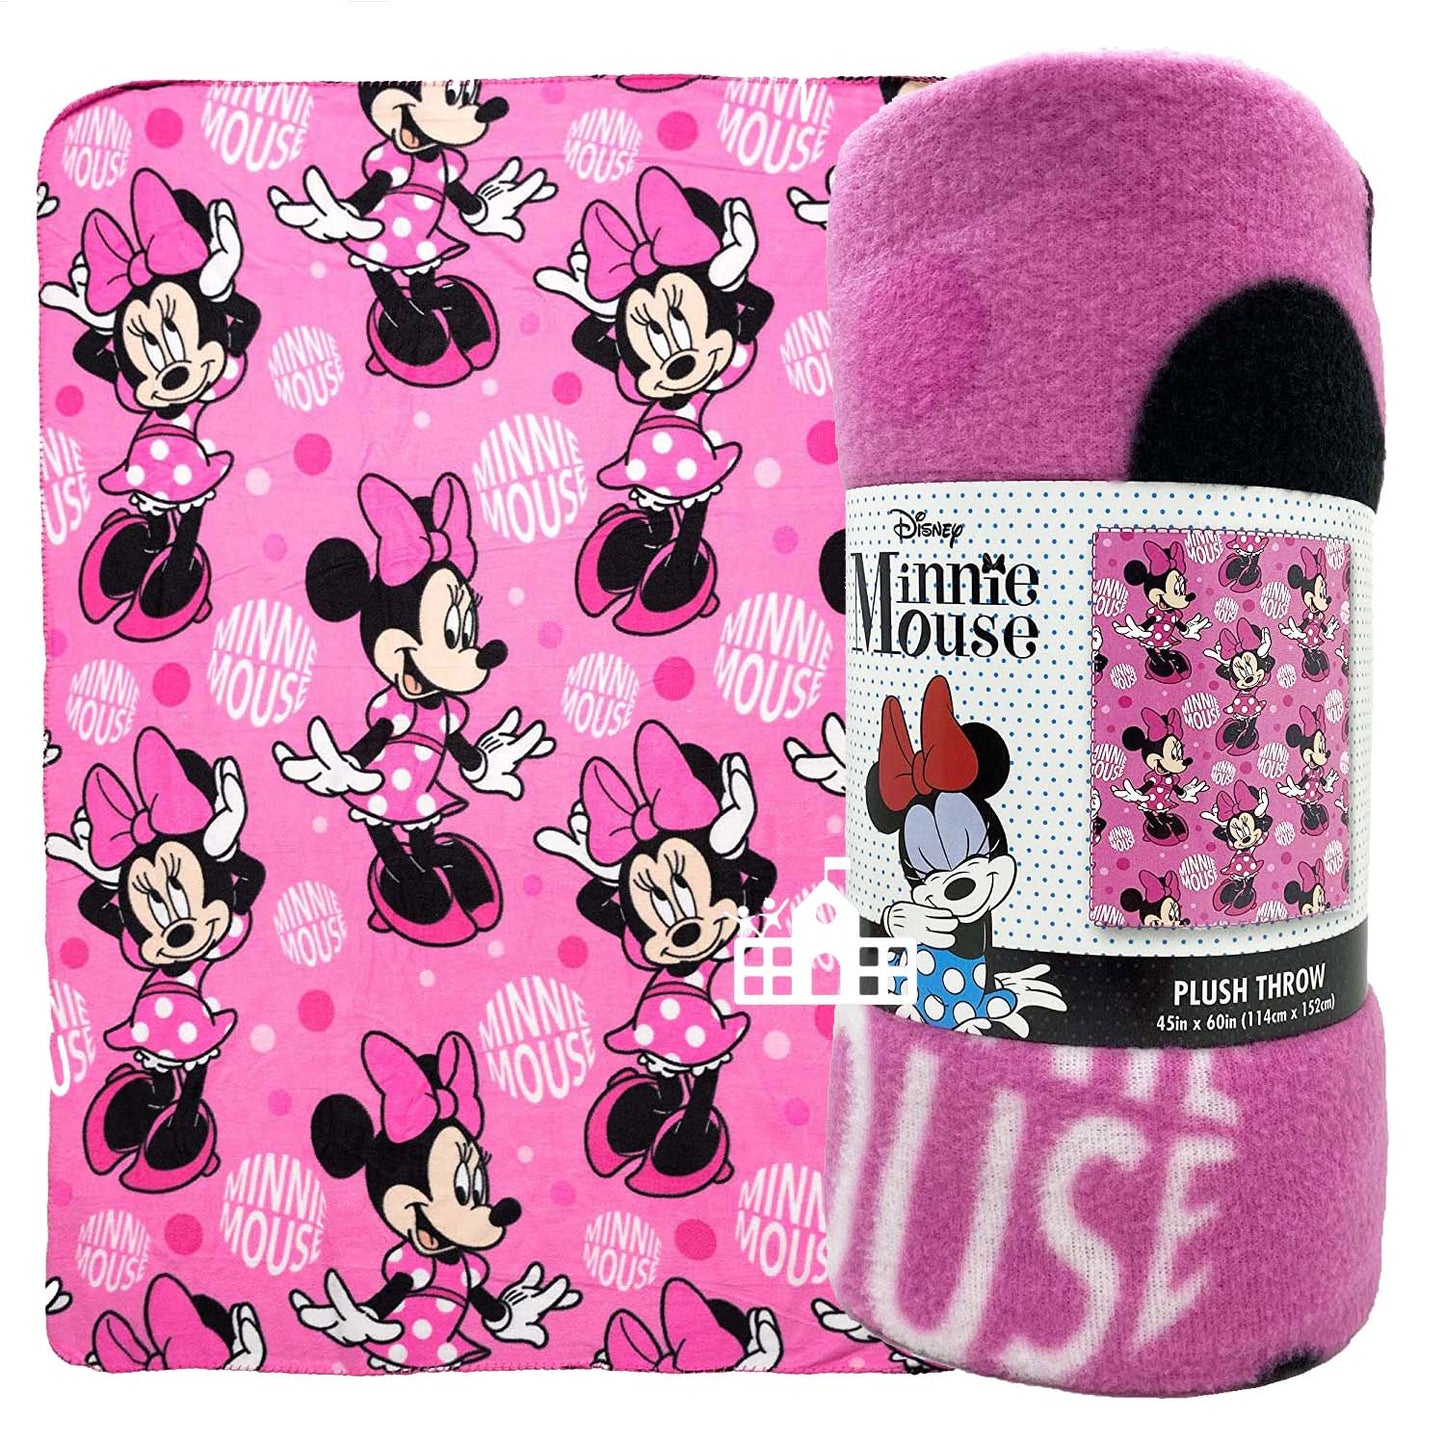 Minnie Mouse Plush Throw Blanket 45" x 60" Allover Print Pink 114 x 152cm